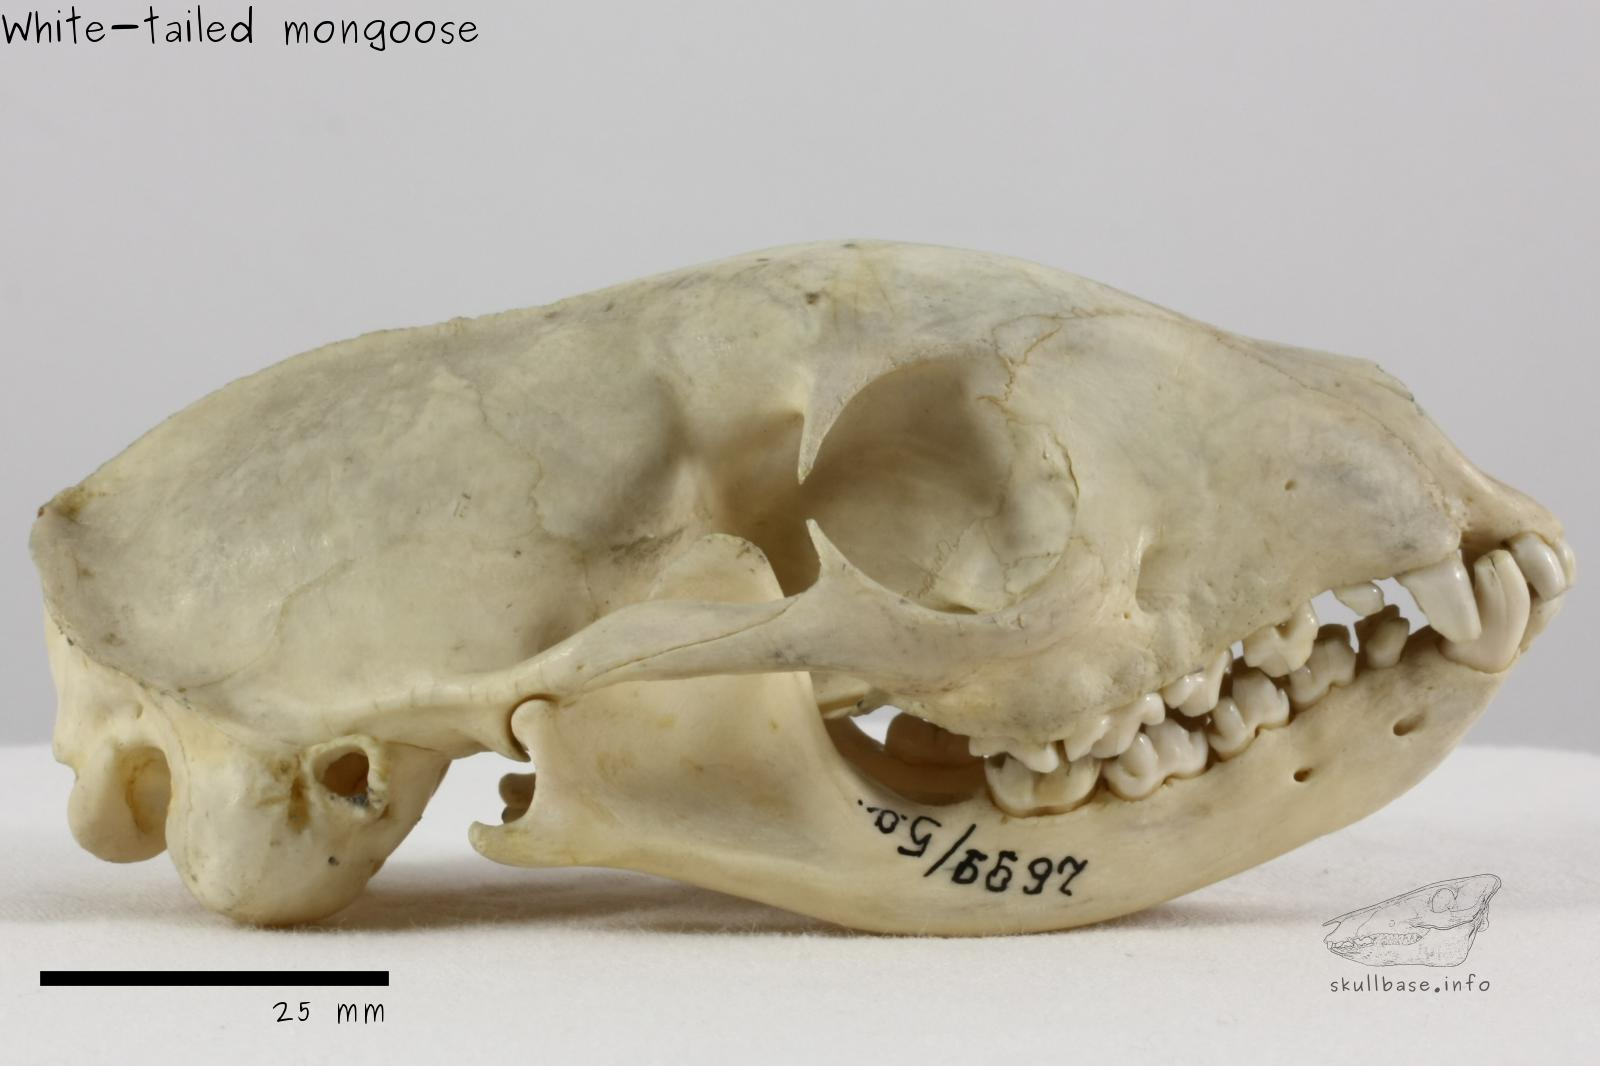 White-tailed mongoose (Ichneumia albicauda) skull lateral view